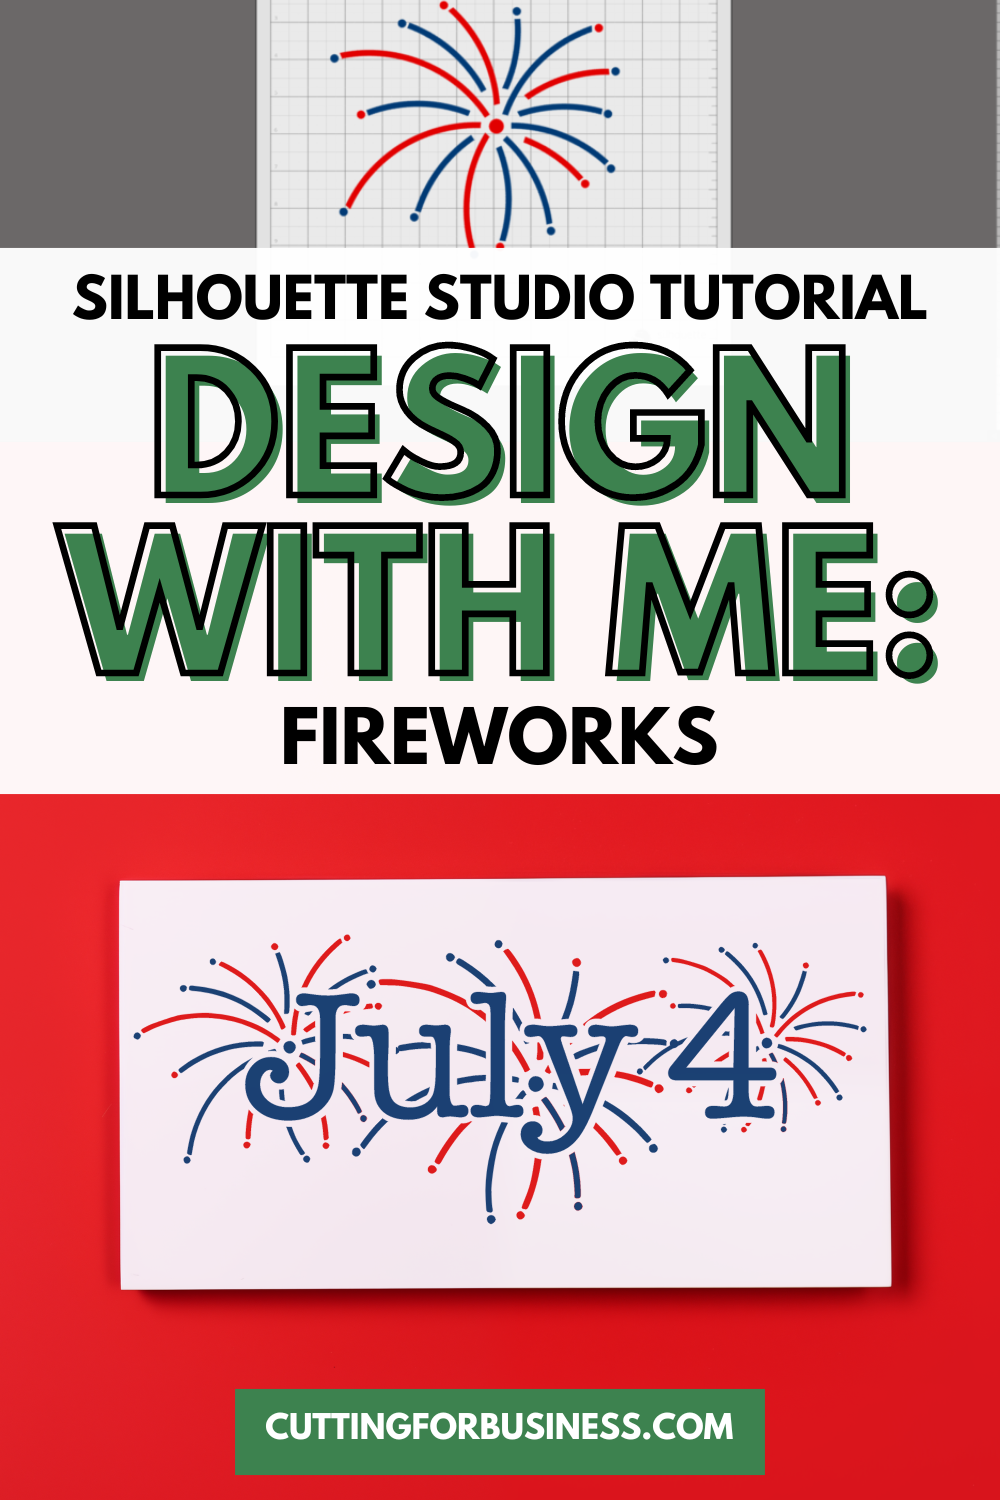 Silhouette Studio Tutorial - How to Draw Fireworks - cuttingforbusiness.com